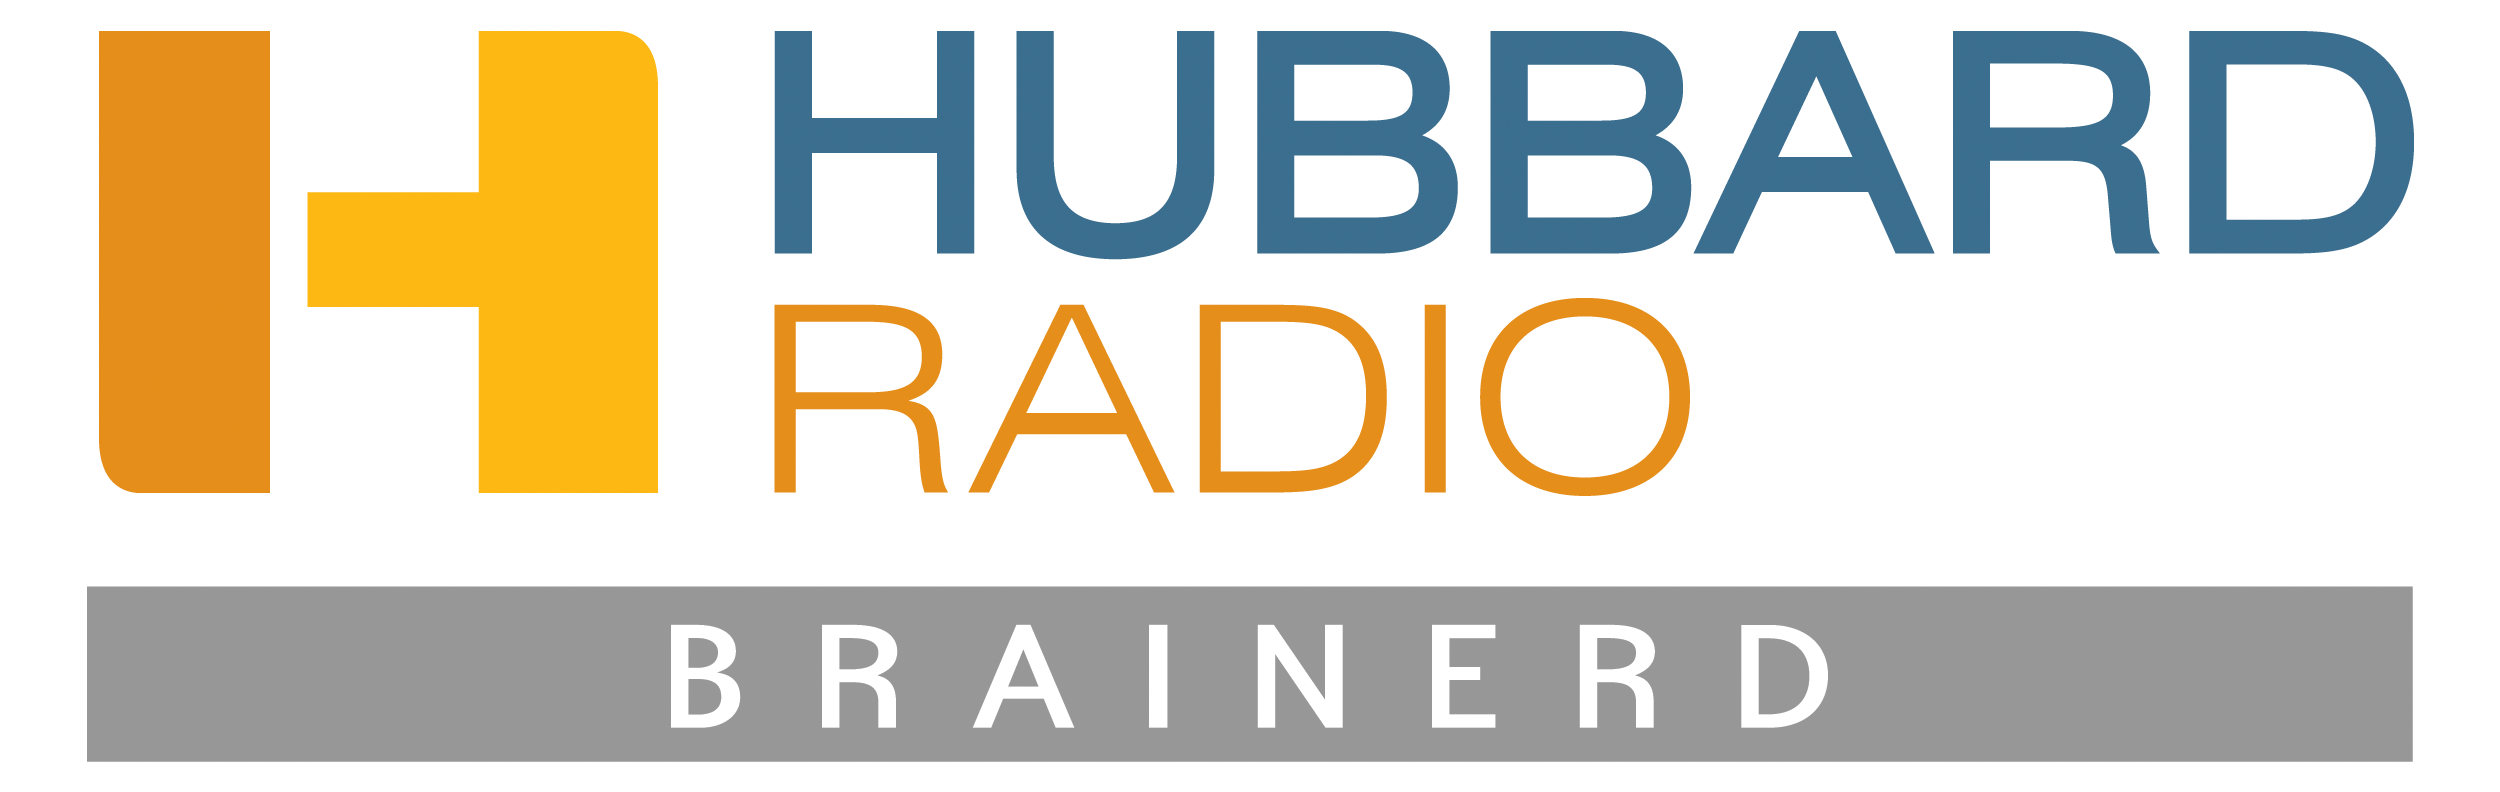 Hubbard Logo - hubbard brainerd logo better size Power Loon